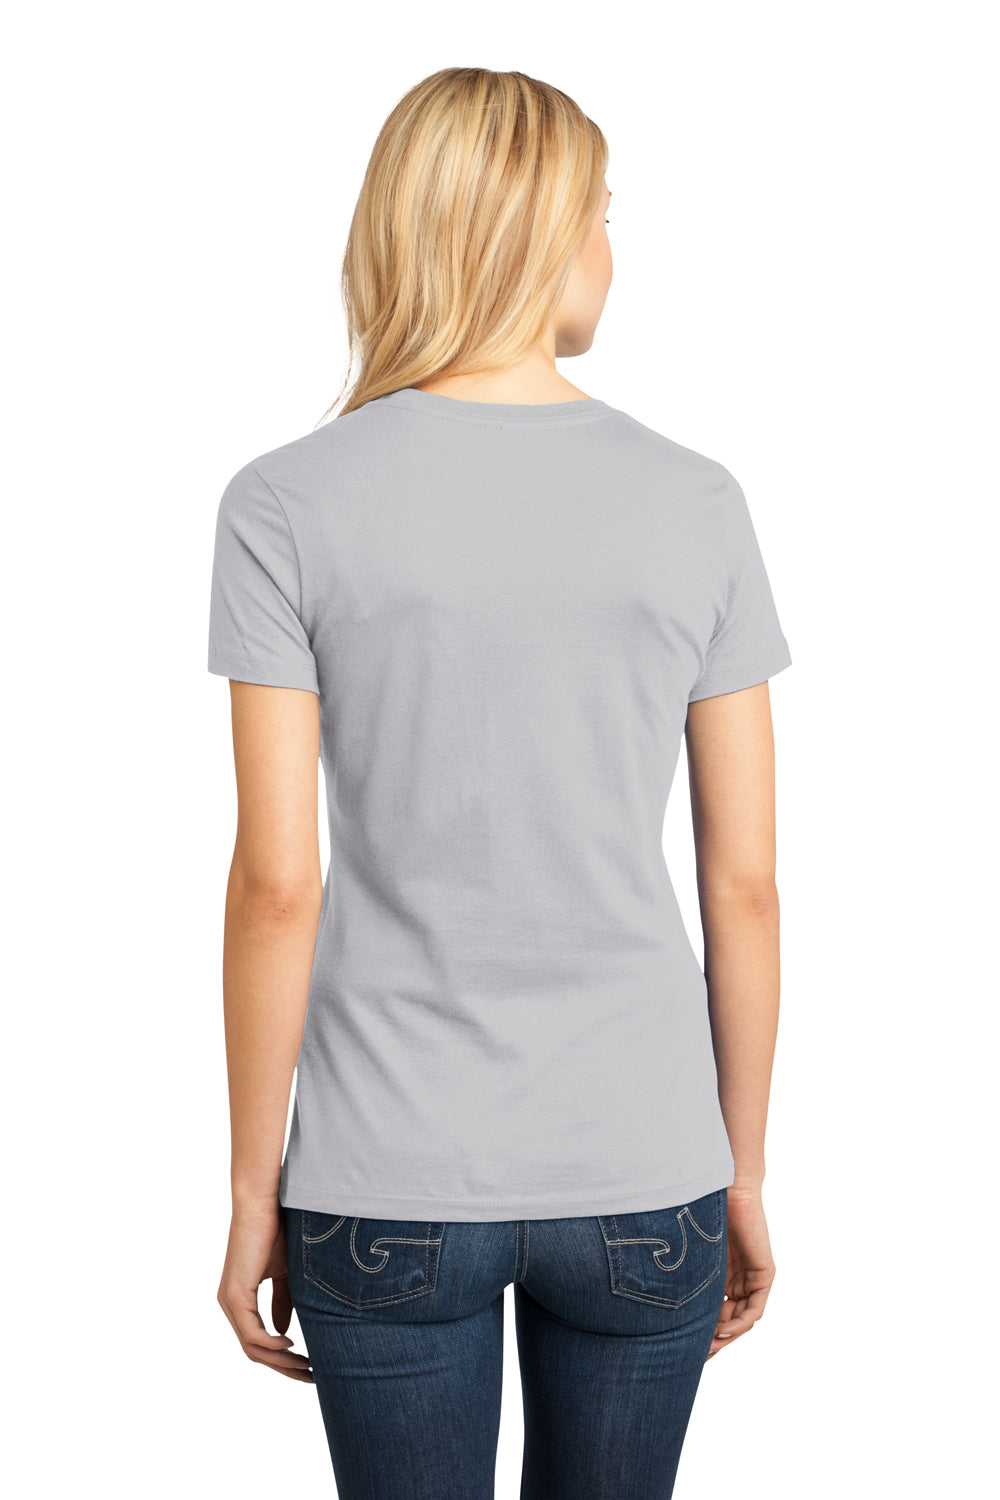 District DM104L Womens Perfect Weight Short Sleeve Crewneck T-Shirt Silver Grey Back